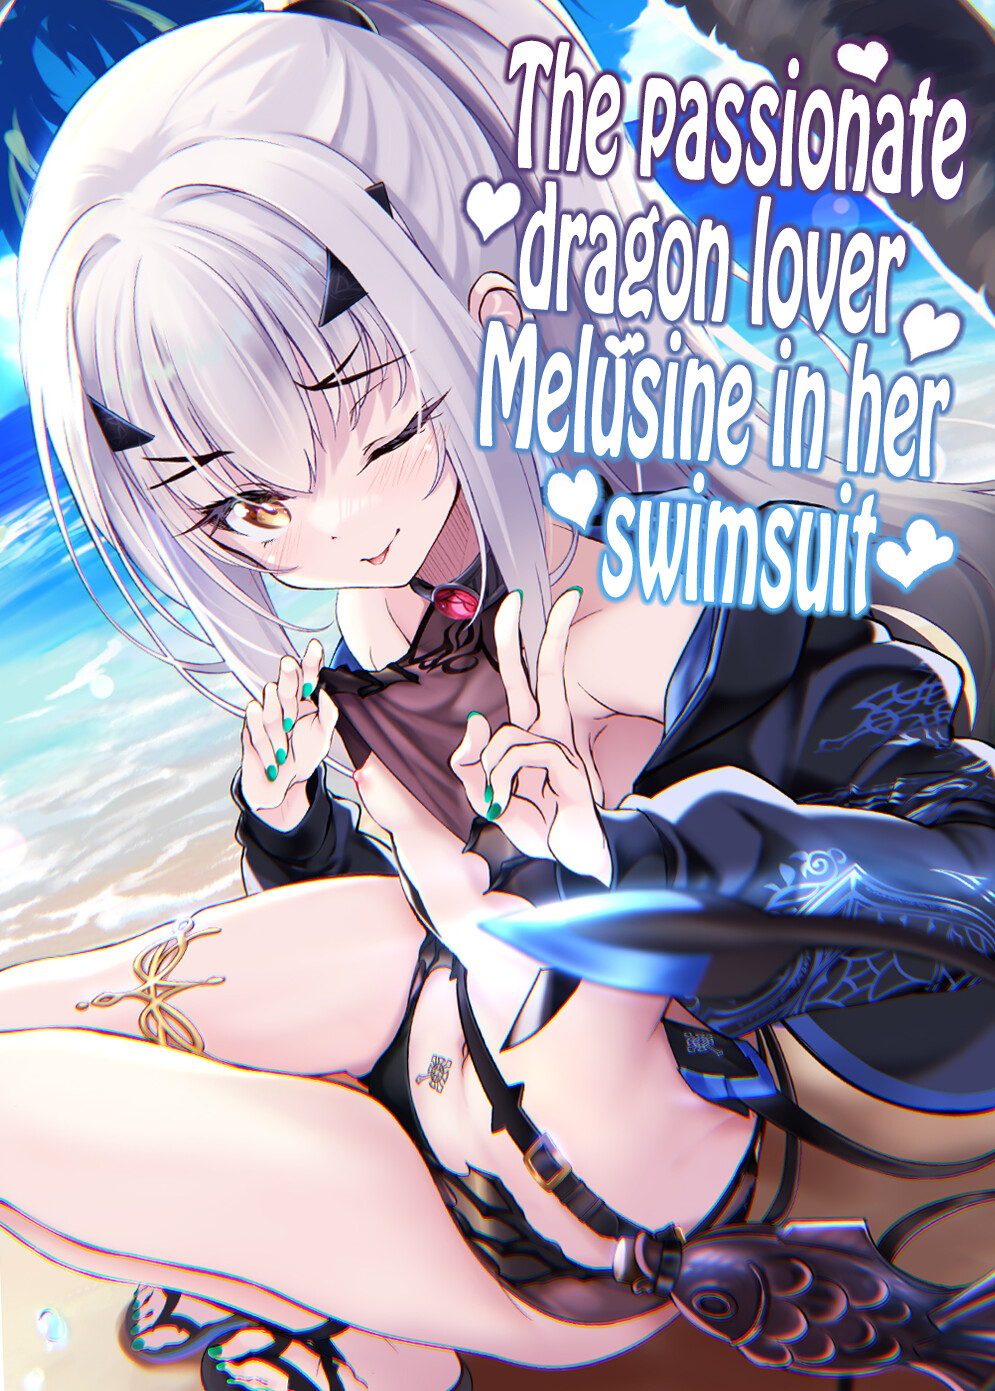 Hentai Manga Comic-he passionate dragon lover Melusine in her swimsuit-Read-1